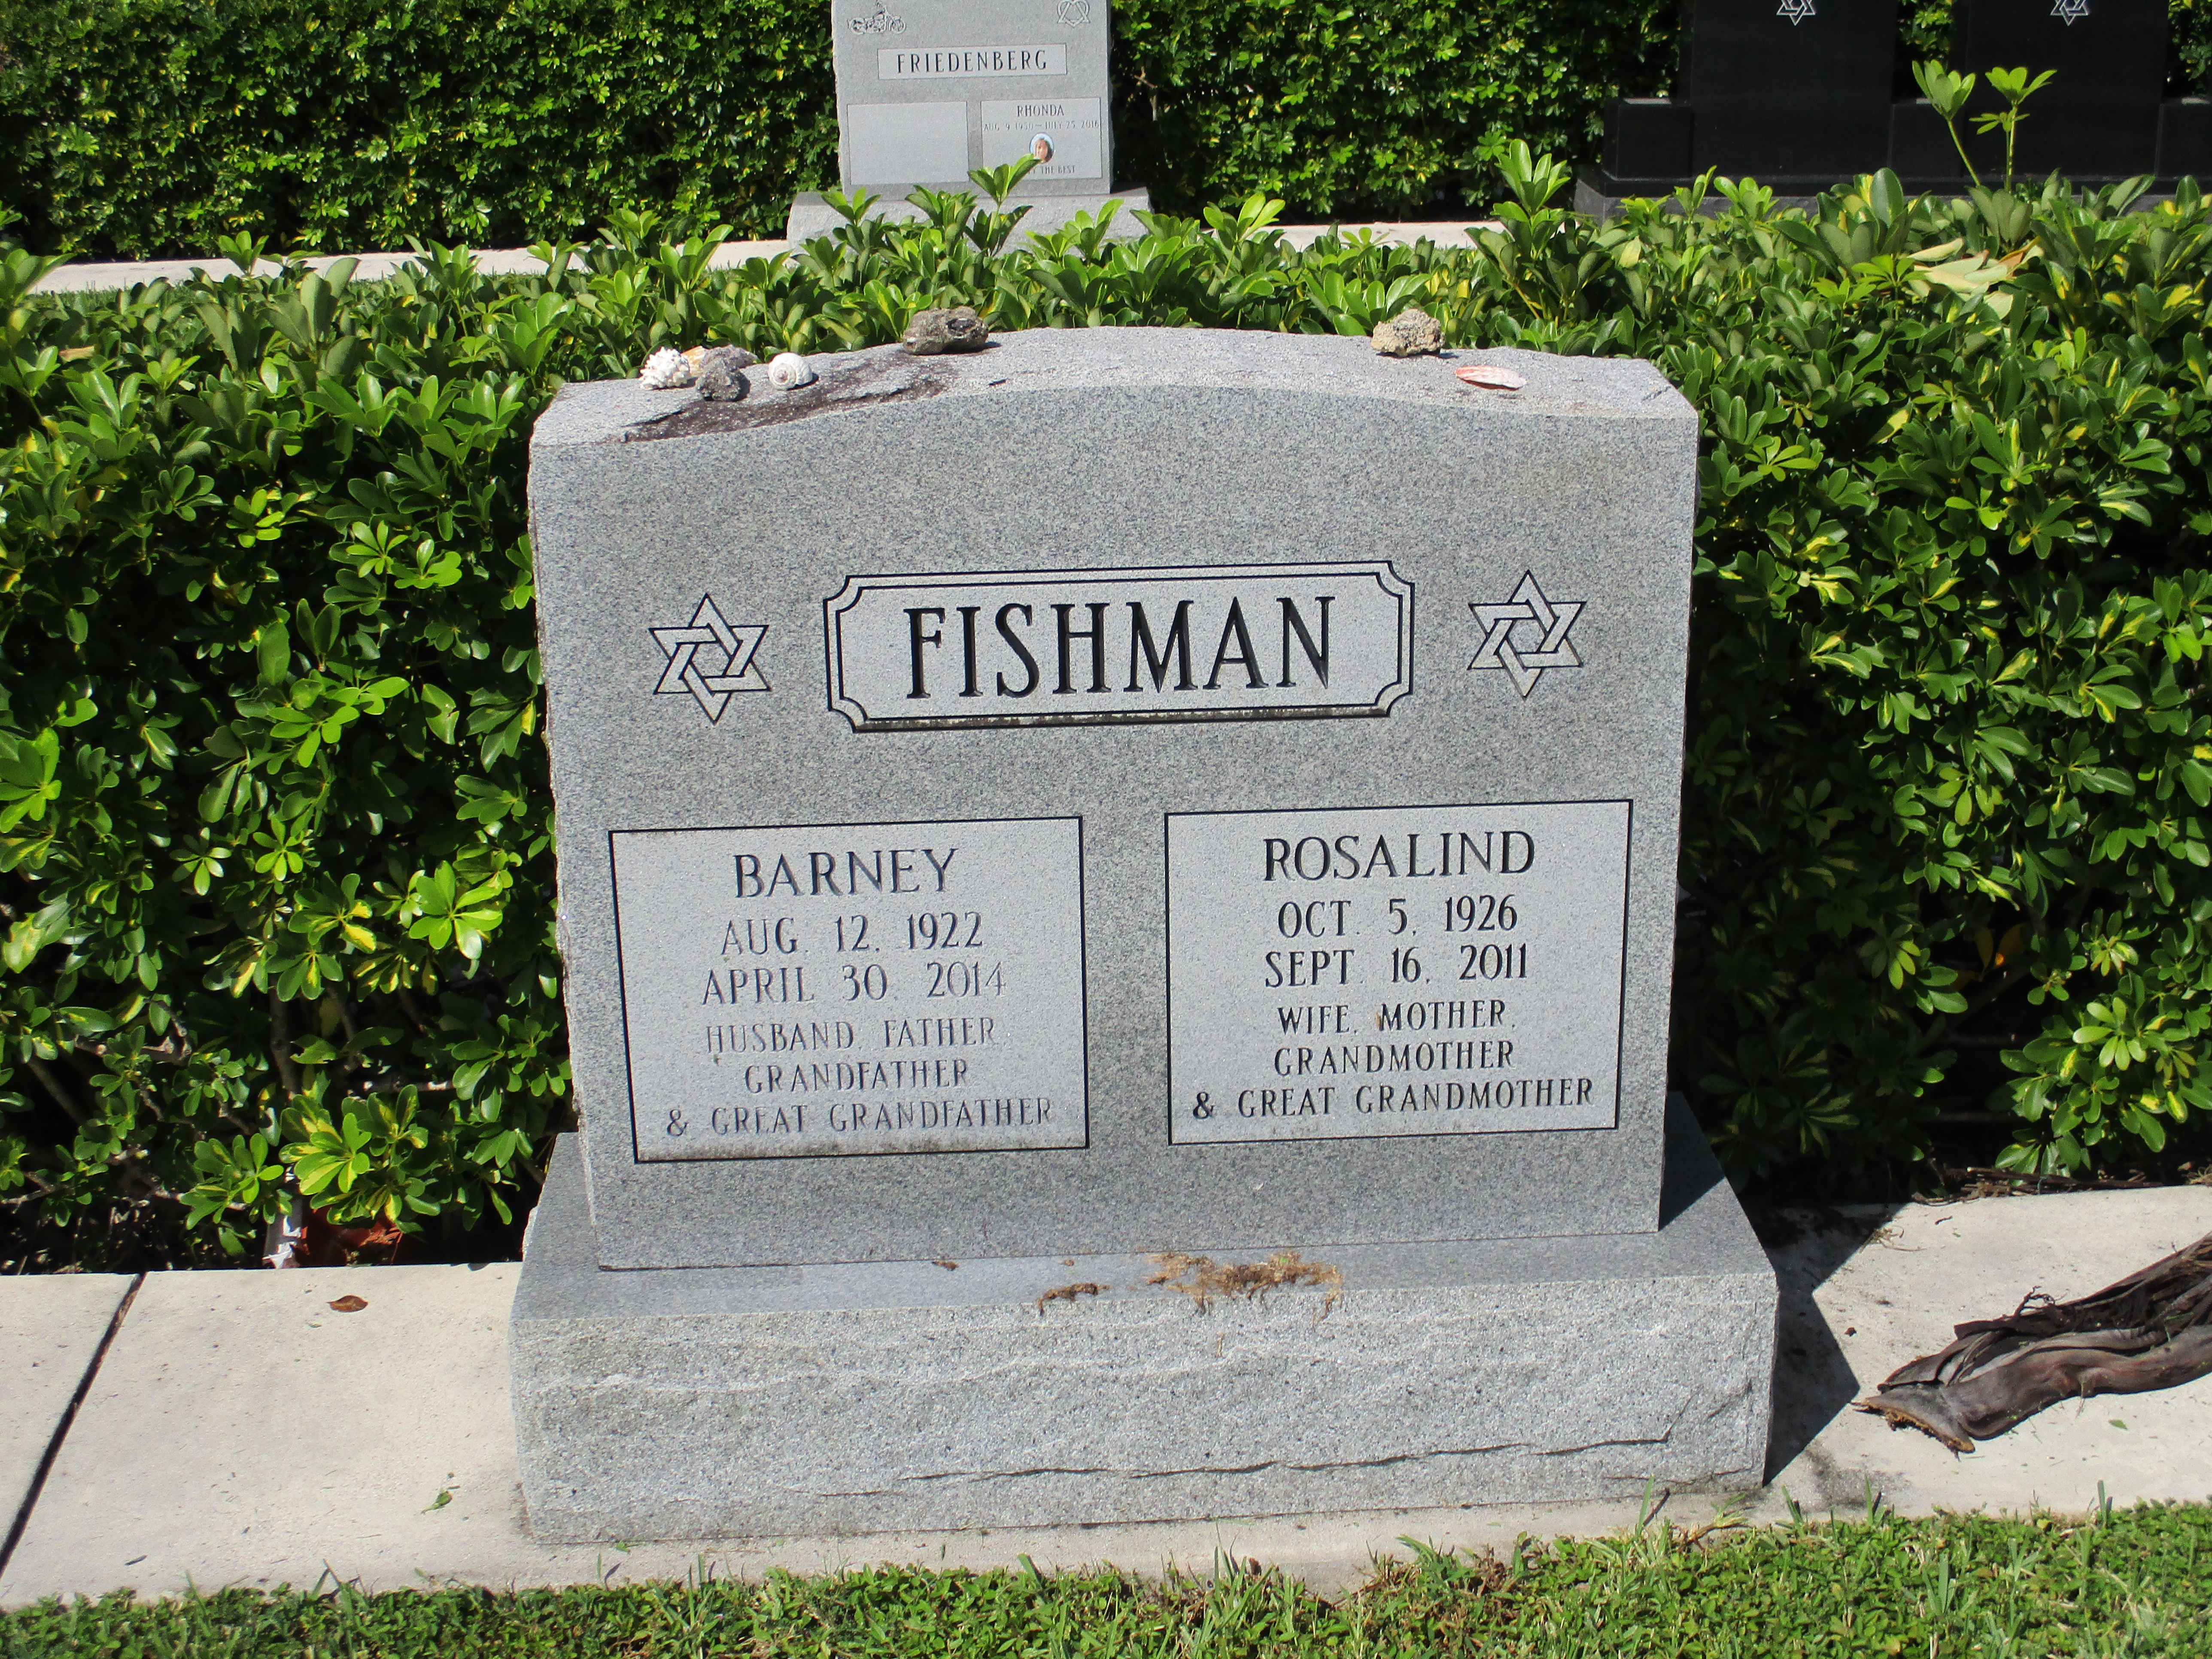 Barney Fishman